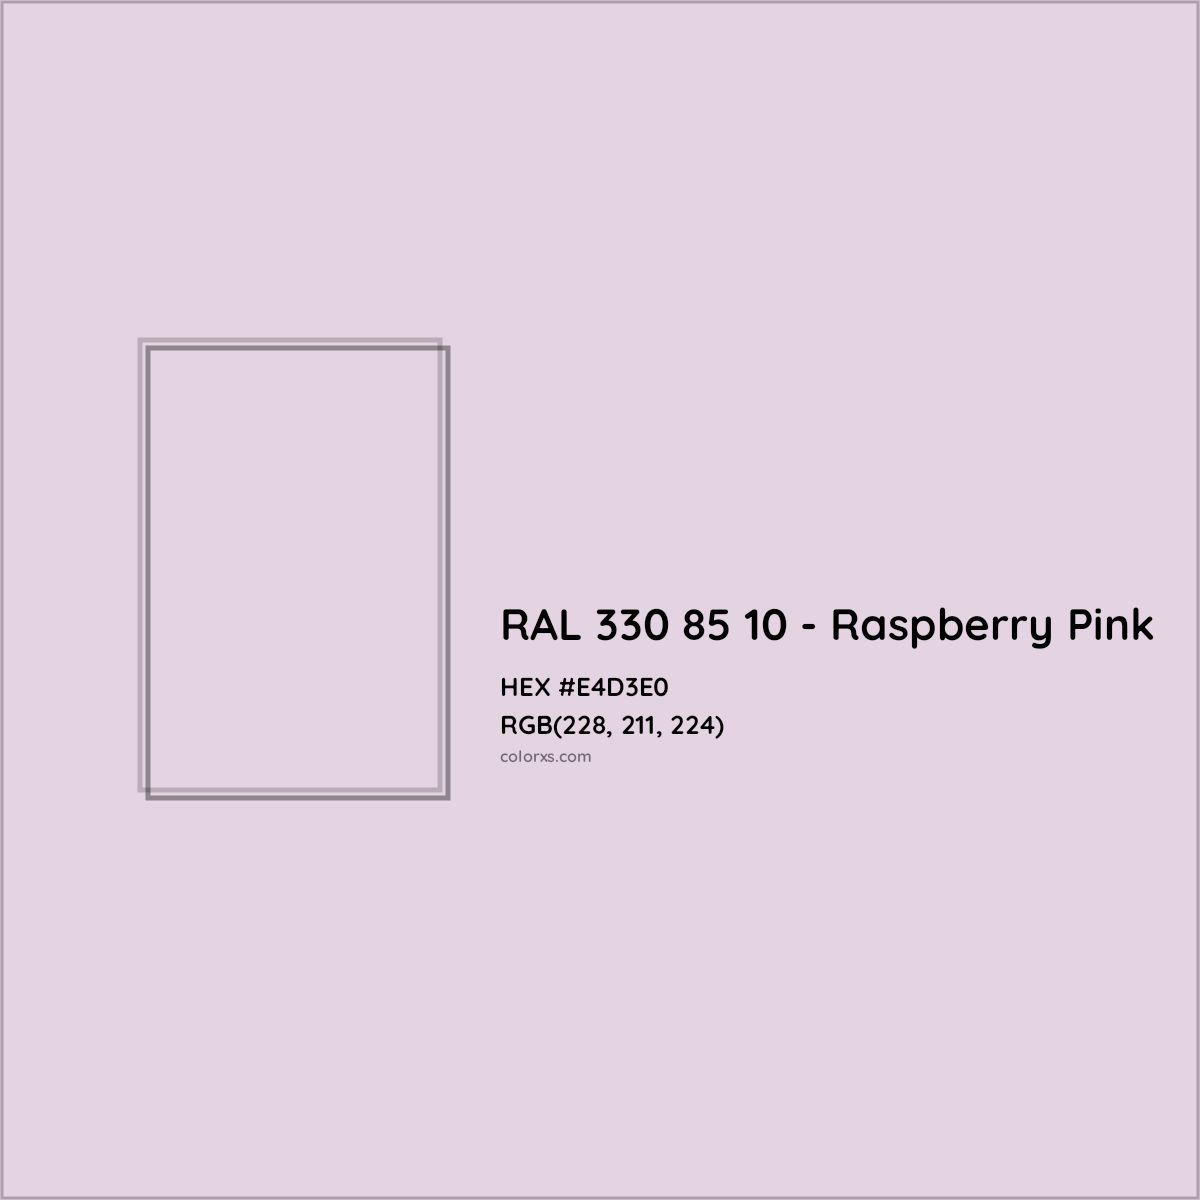 HEX #E4D3E0 RAL 330 85 10 - Raspberry Pink CMS RAL Design - Color Code